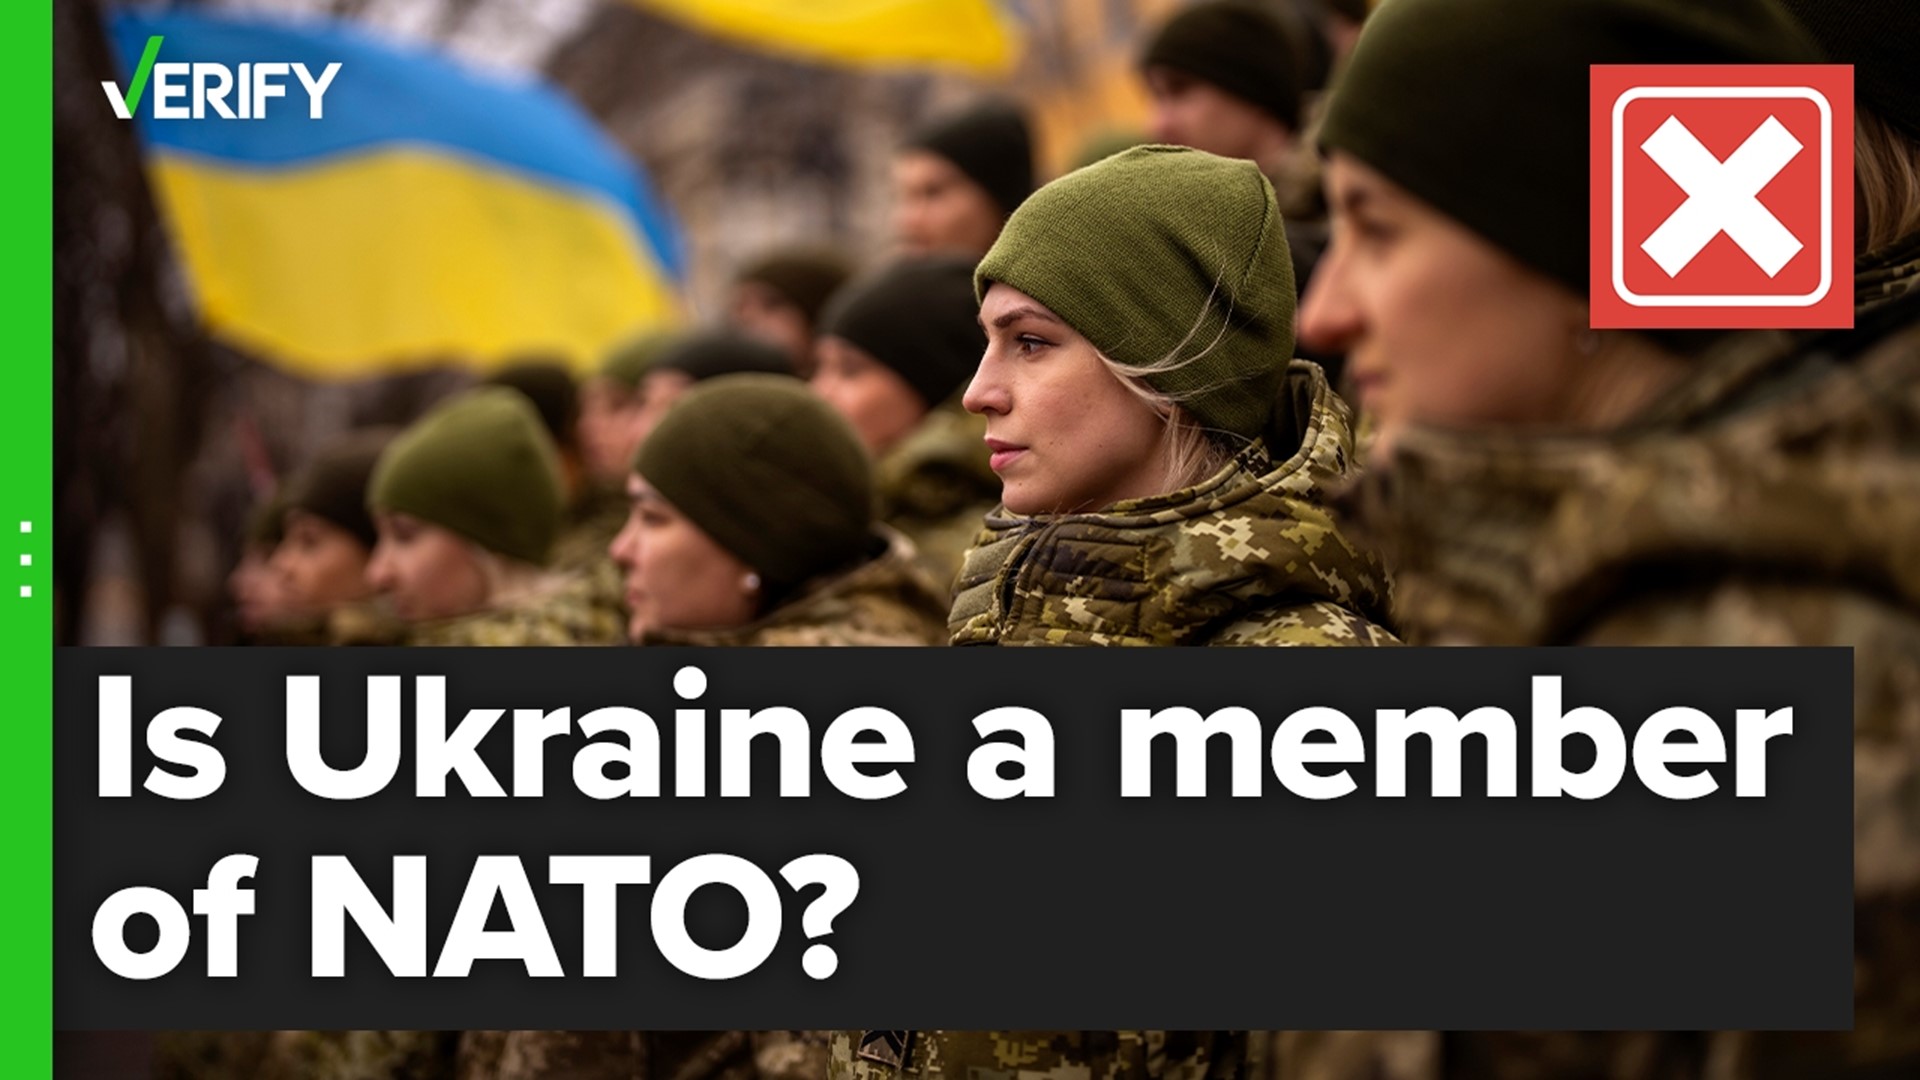 Is Ukraine a NATO member?  The VERIFY team confirms this is false.